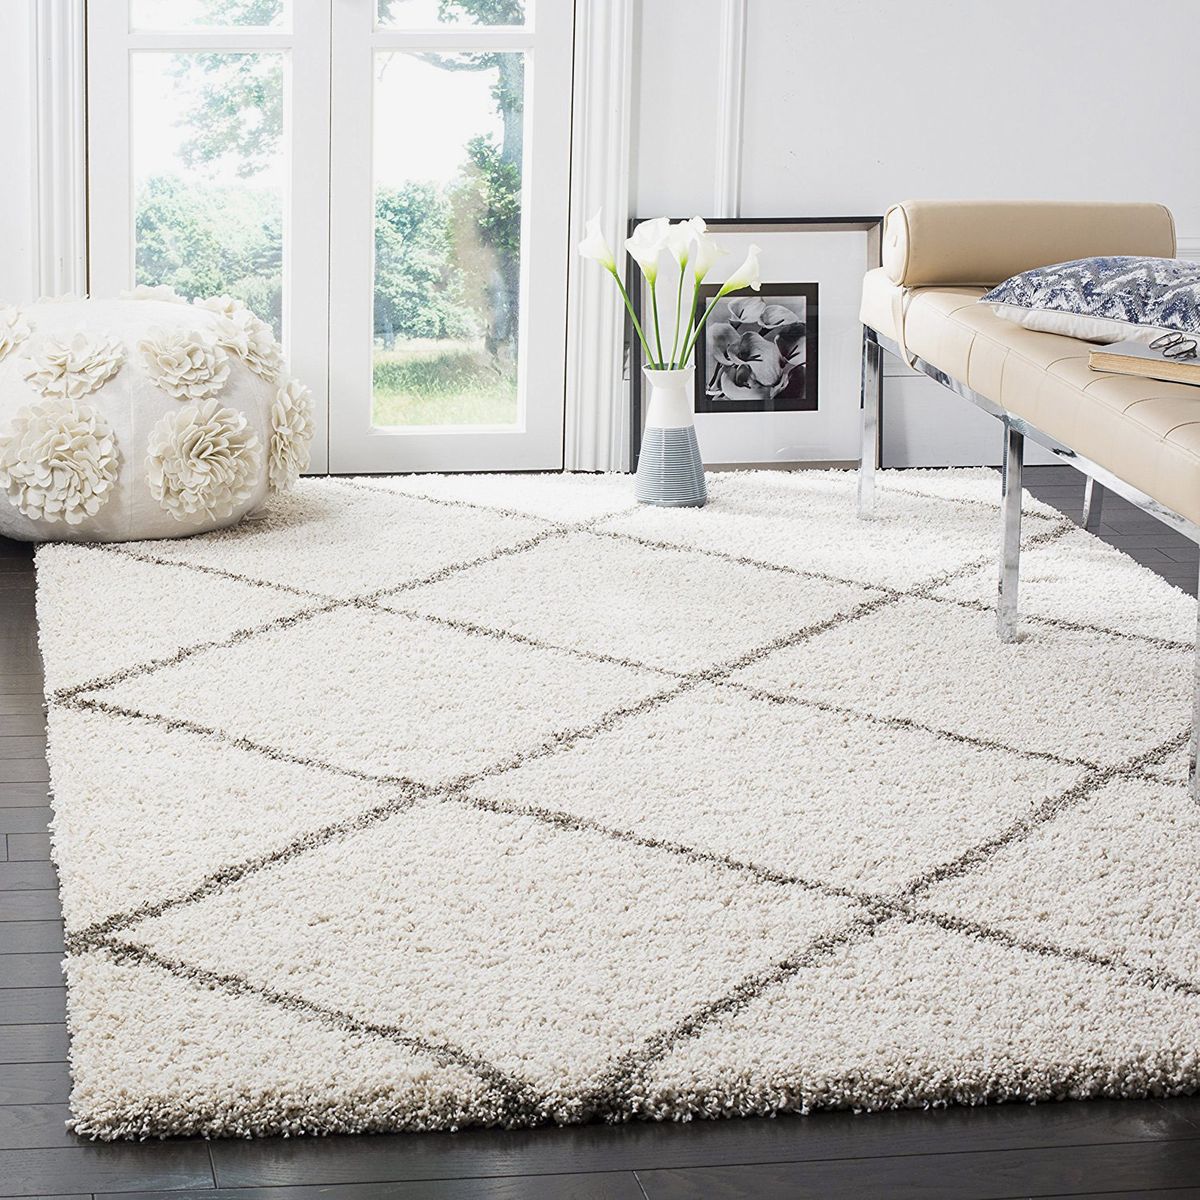 Fluffy Bedroom Carpet 3'11 x 6'0 Grey ECARPETGALLERY Modern Shag Area Rug for Living Room 